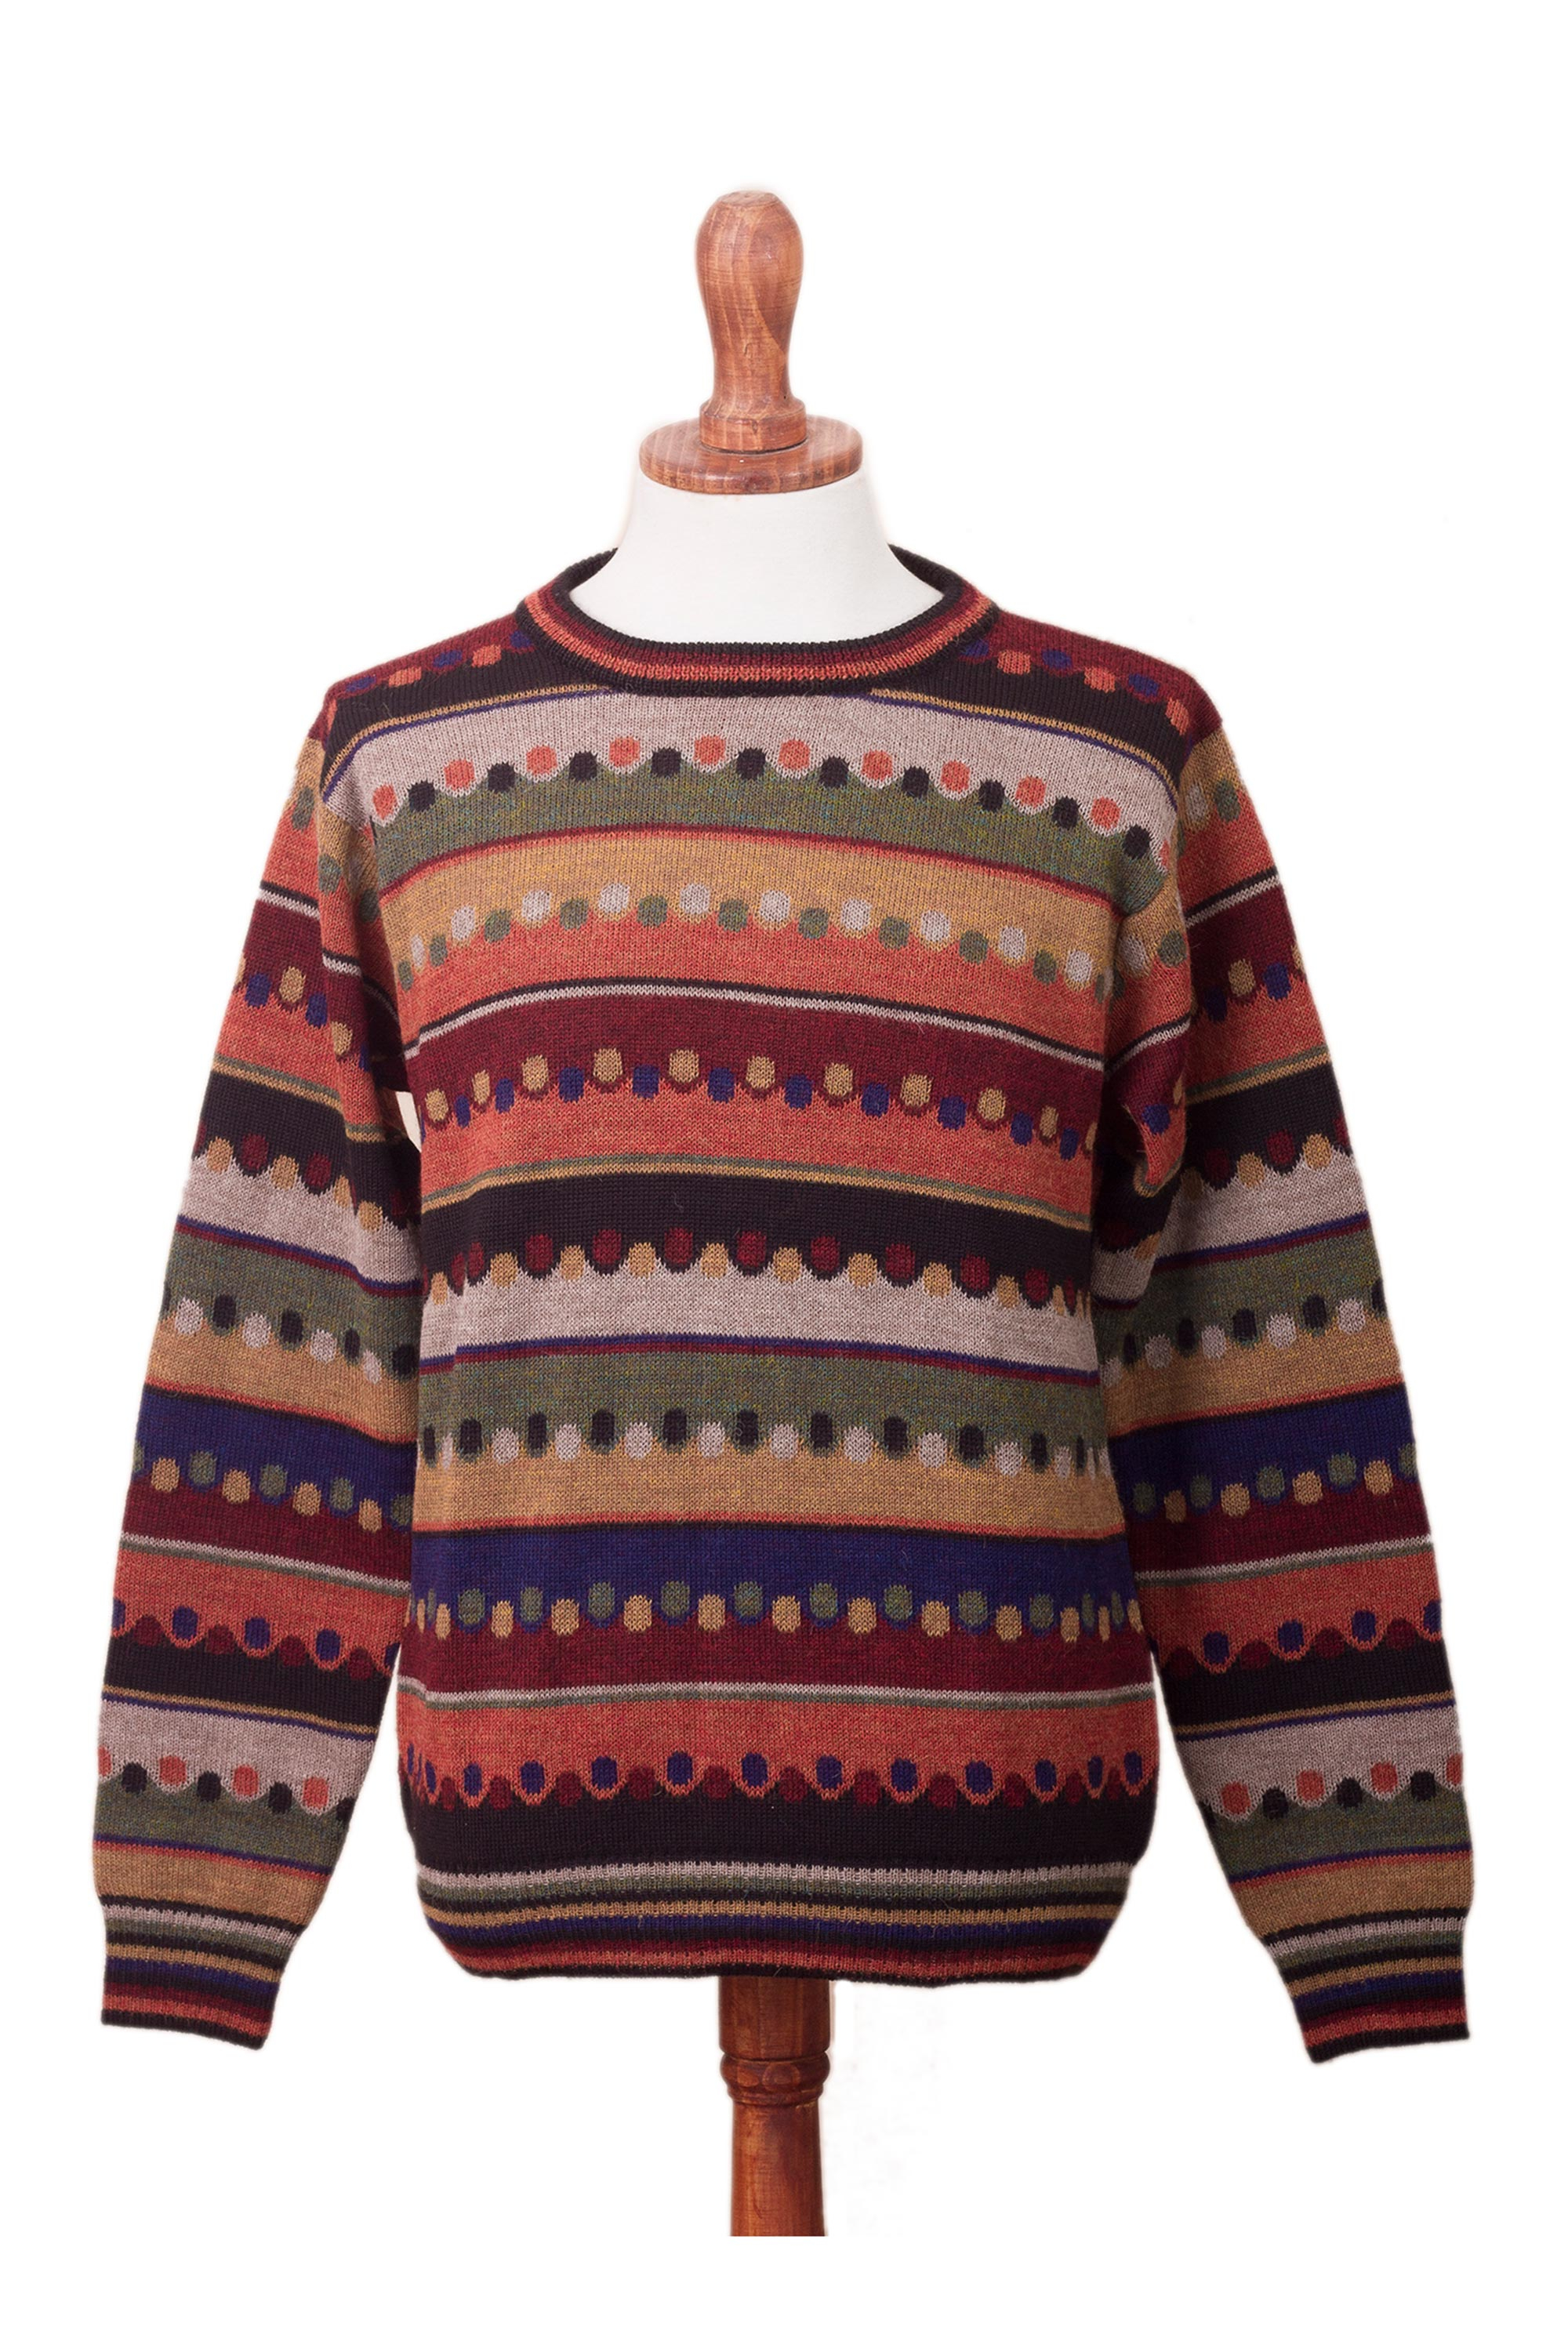 Men's Sweater Knit with Peruvian Alpaca Wool Makalu - Inti Alpaca -  Alpaca - Clothing